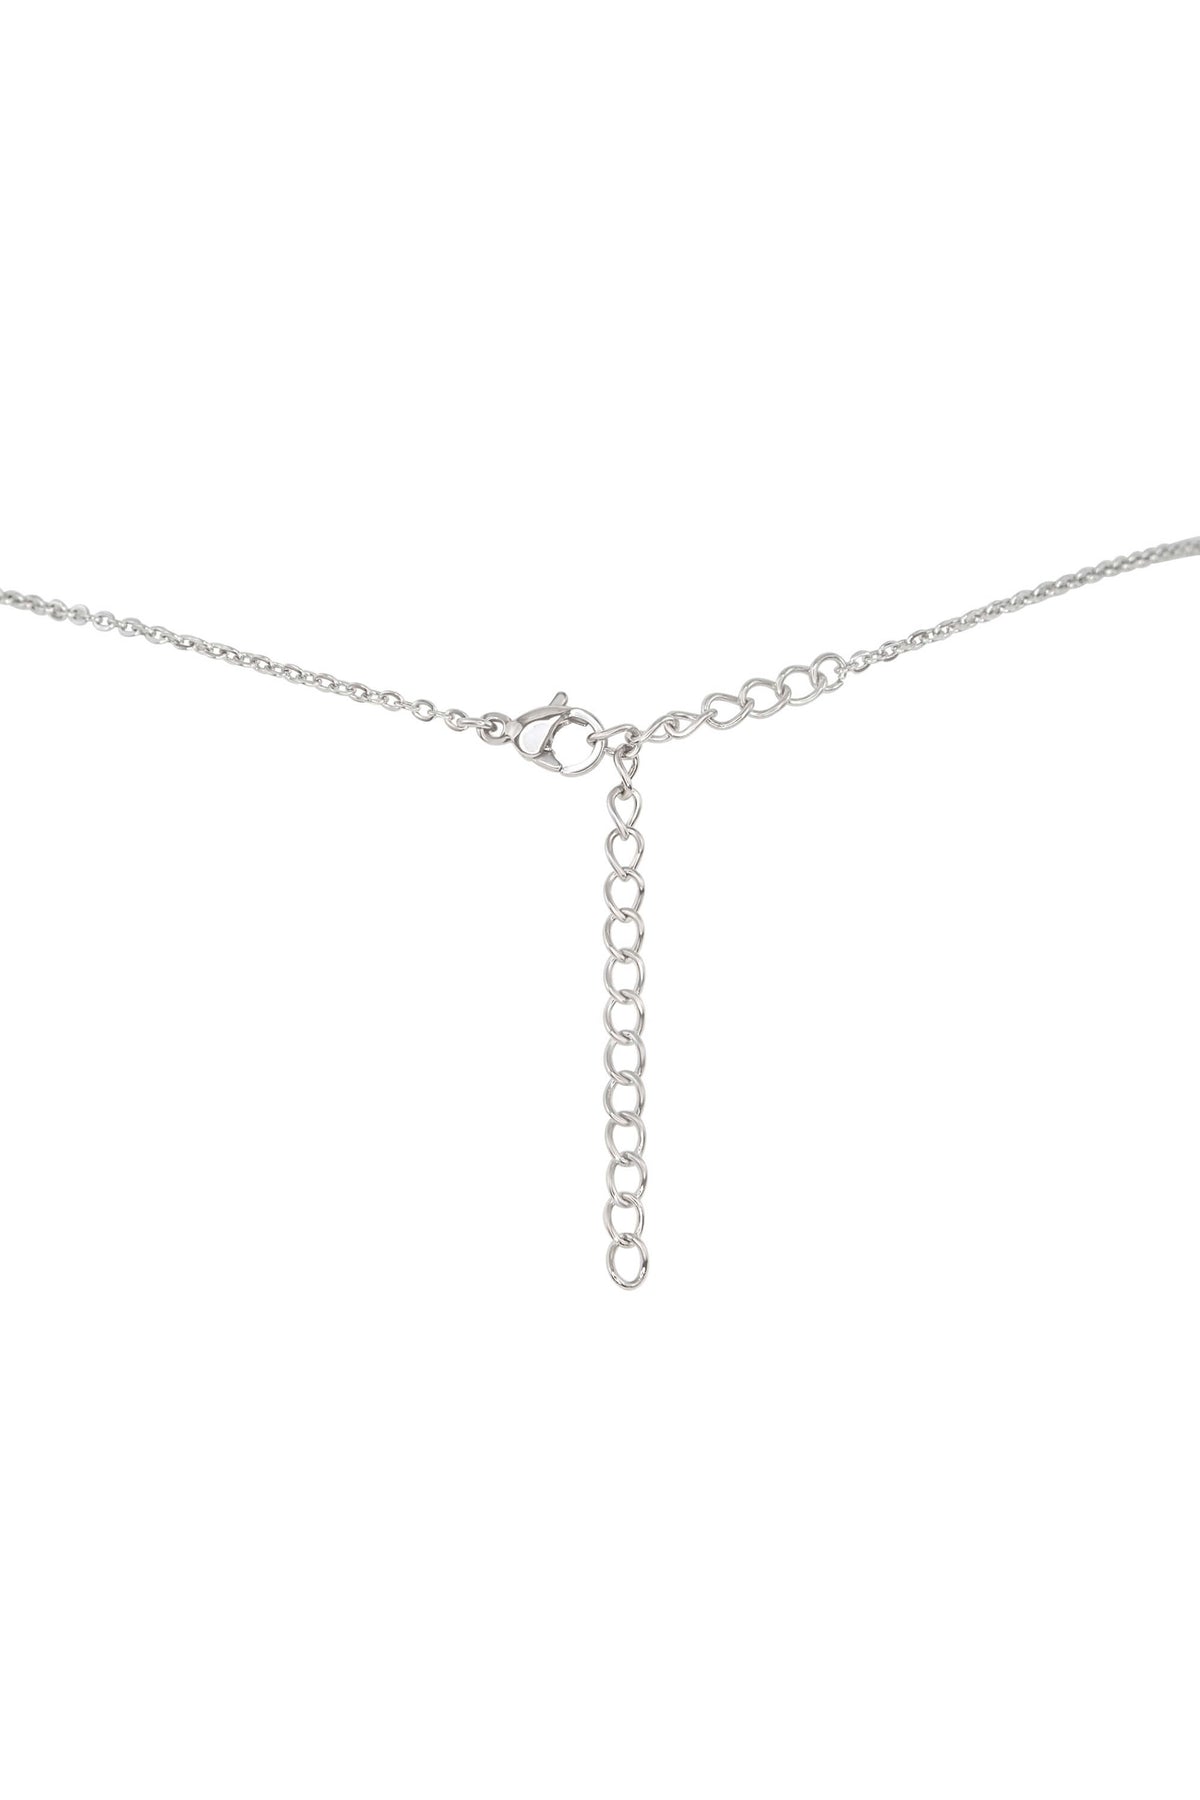 Raw Crystal Pendant Choker - Sunstone - Stainless Steel - Luna Tide Handmade Jewellery